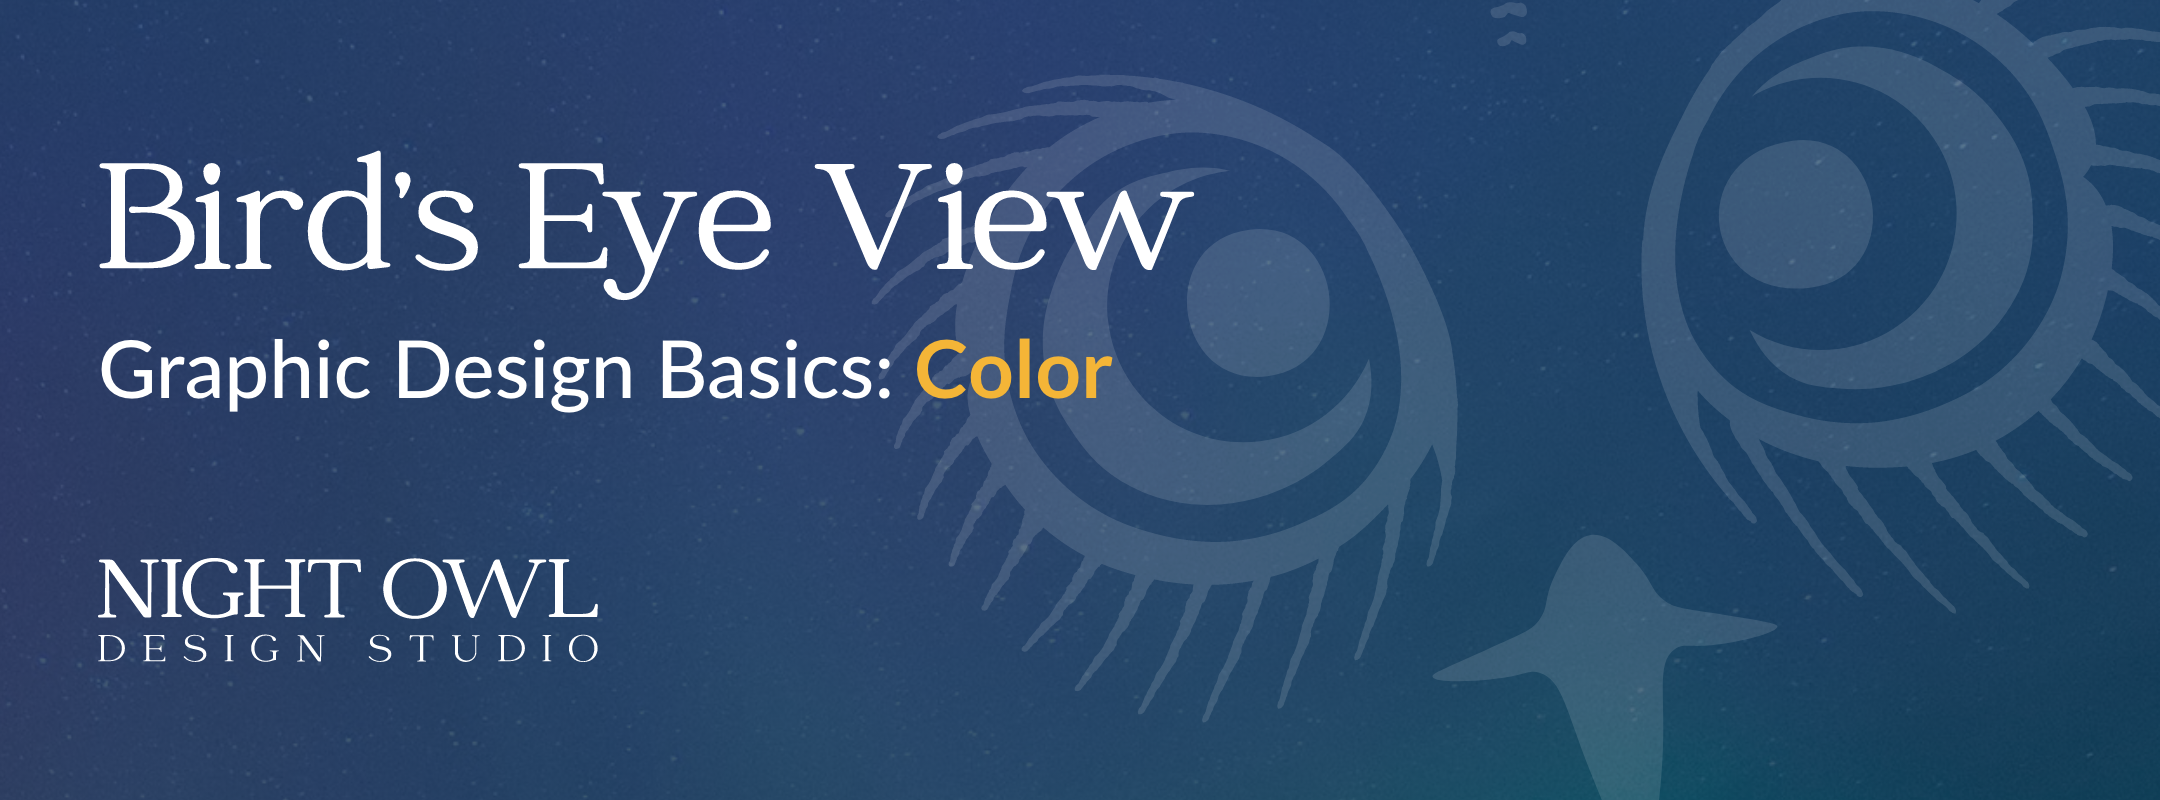 Bird’s Eye View - Graphic Design Basics: Color